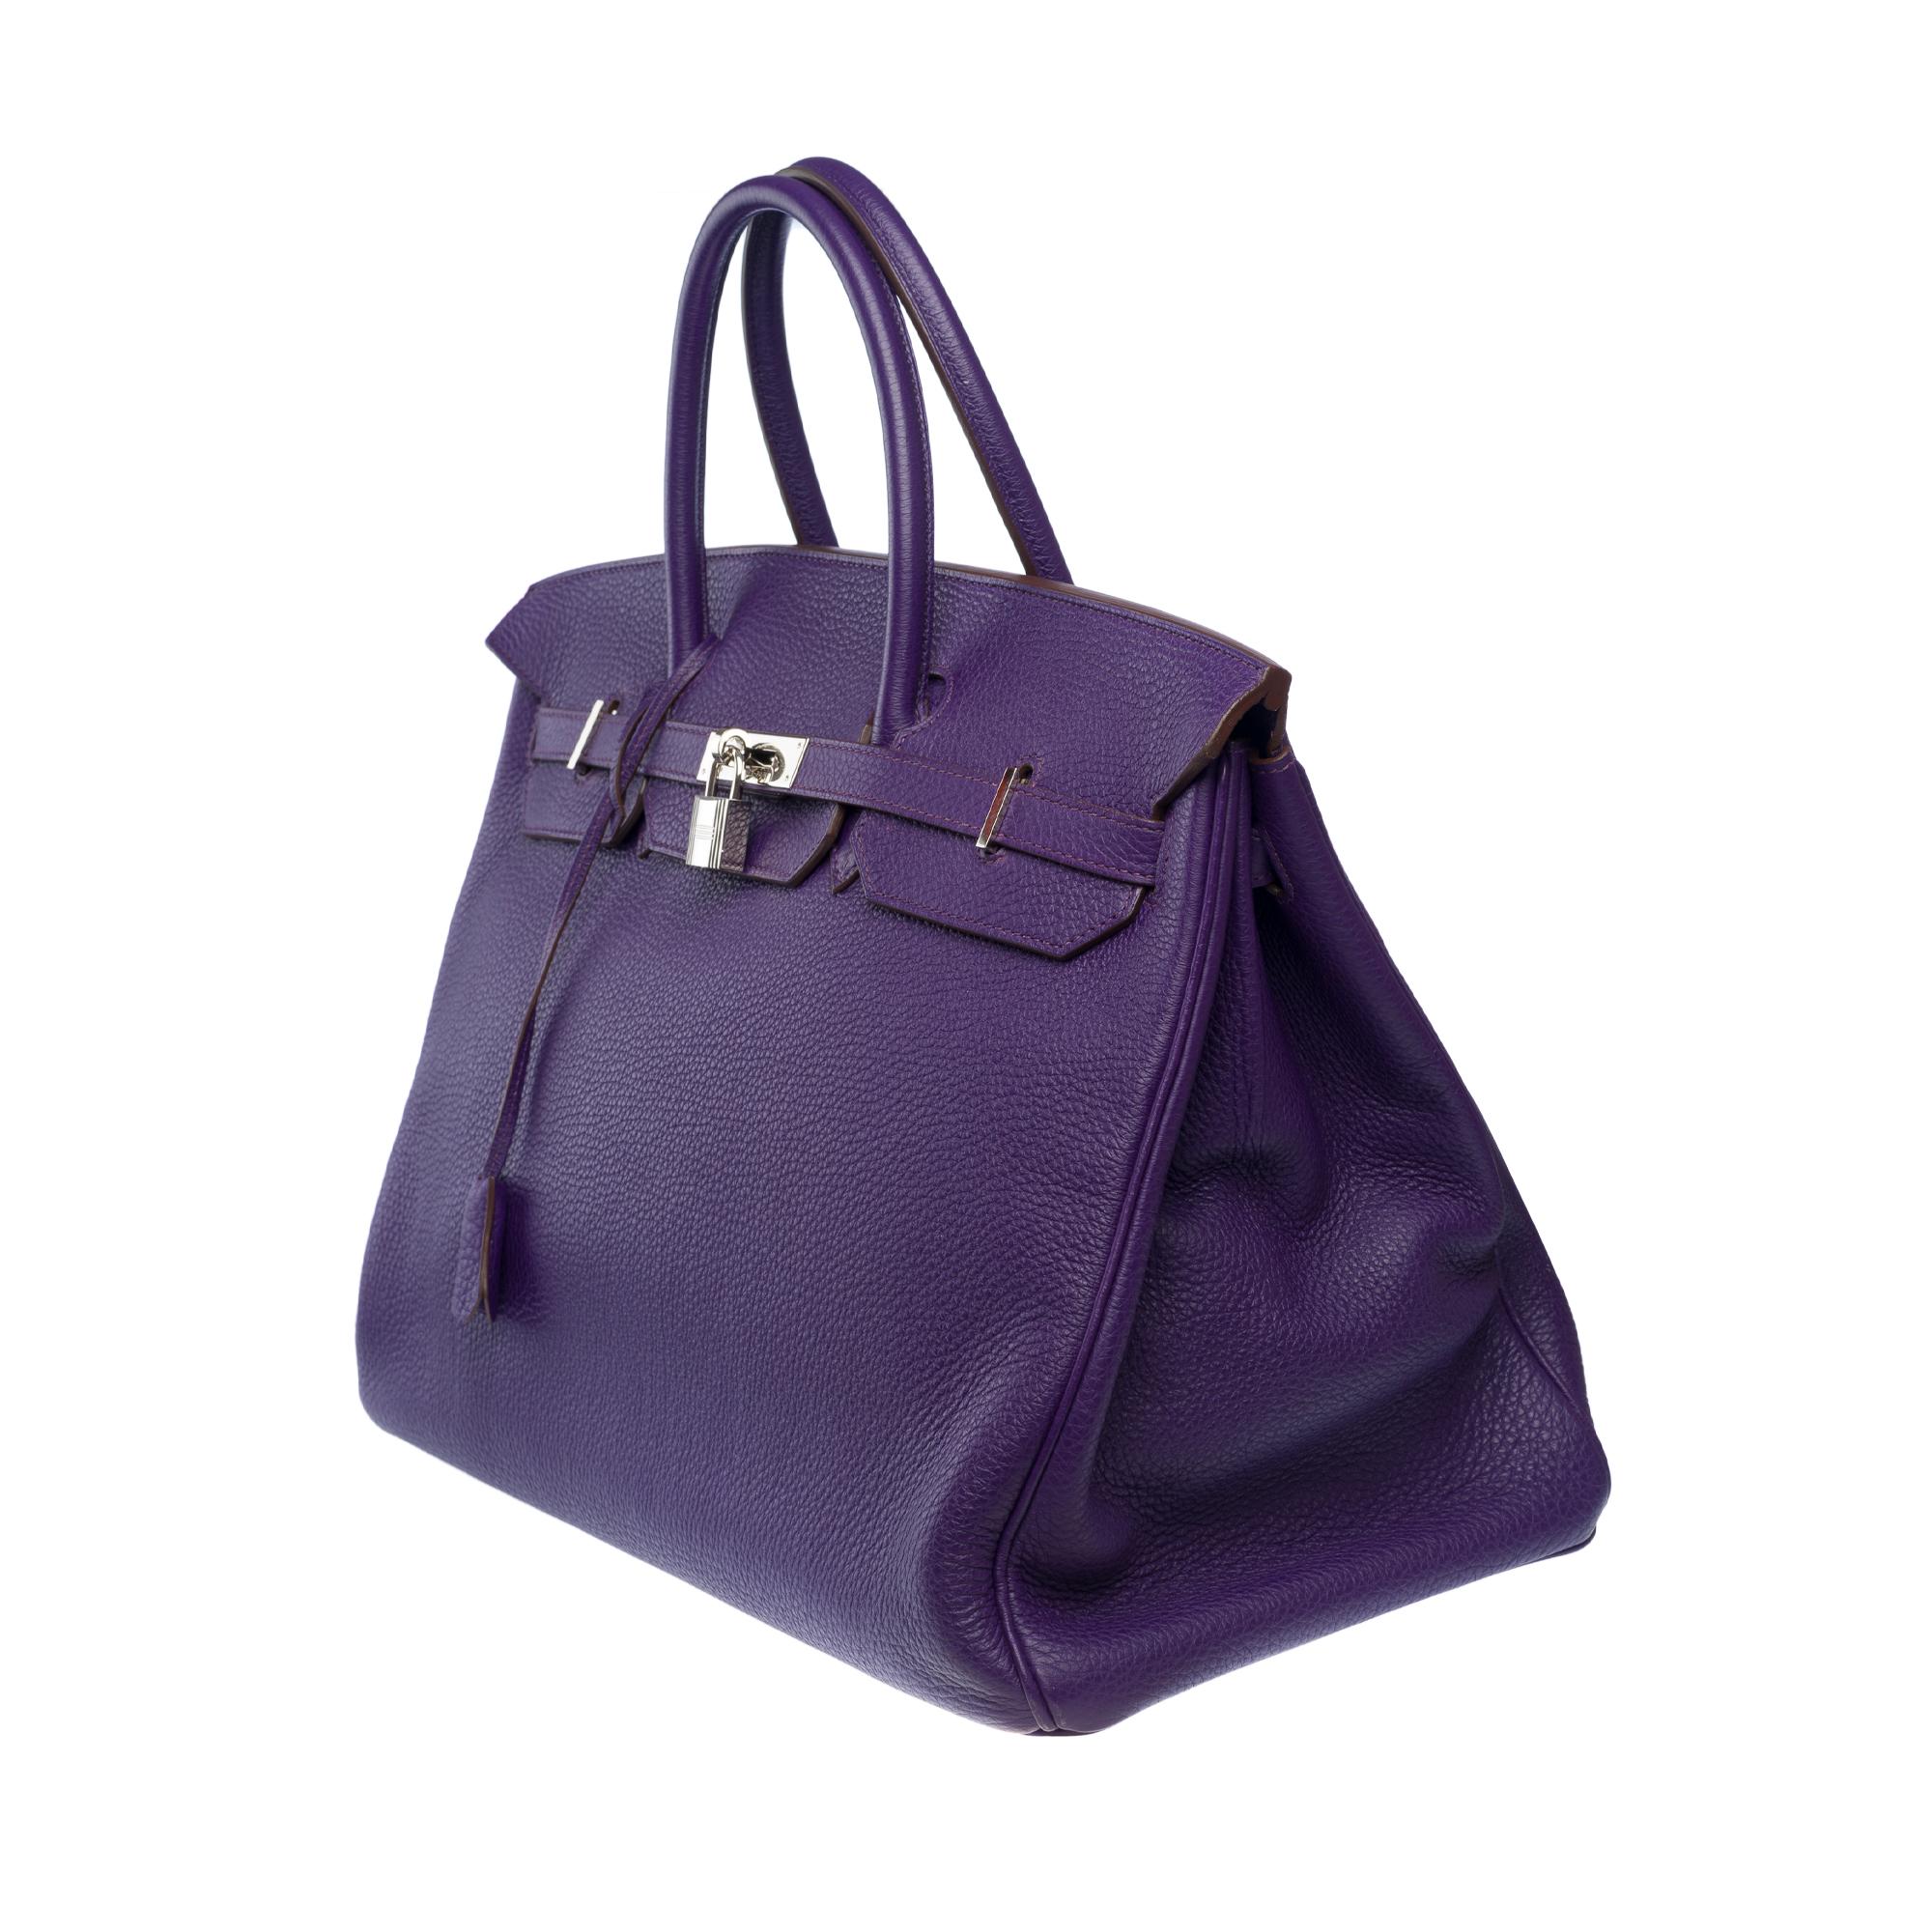 Women's or Men's Classy & Rare Hermes Birkin 40 handbag in Iris Purple Togo leather, SHW